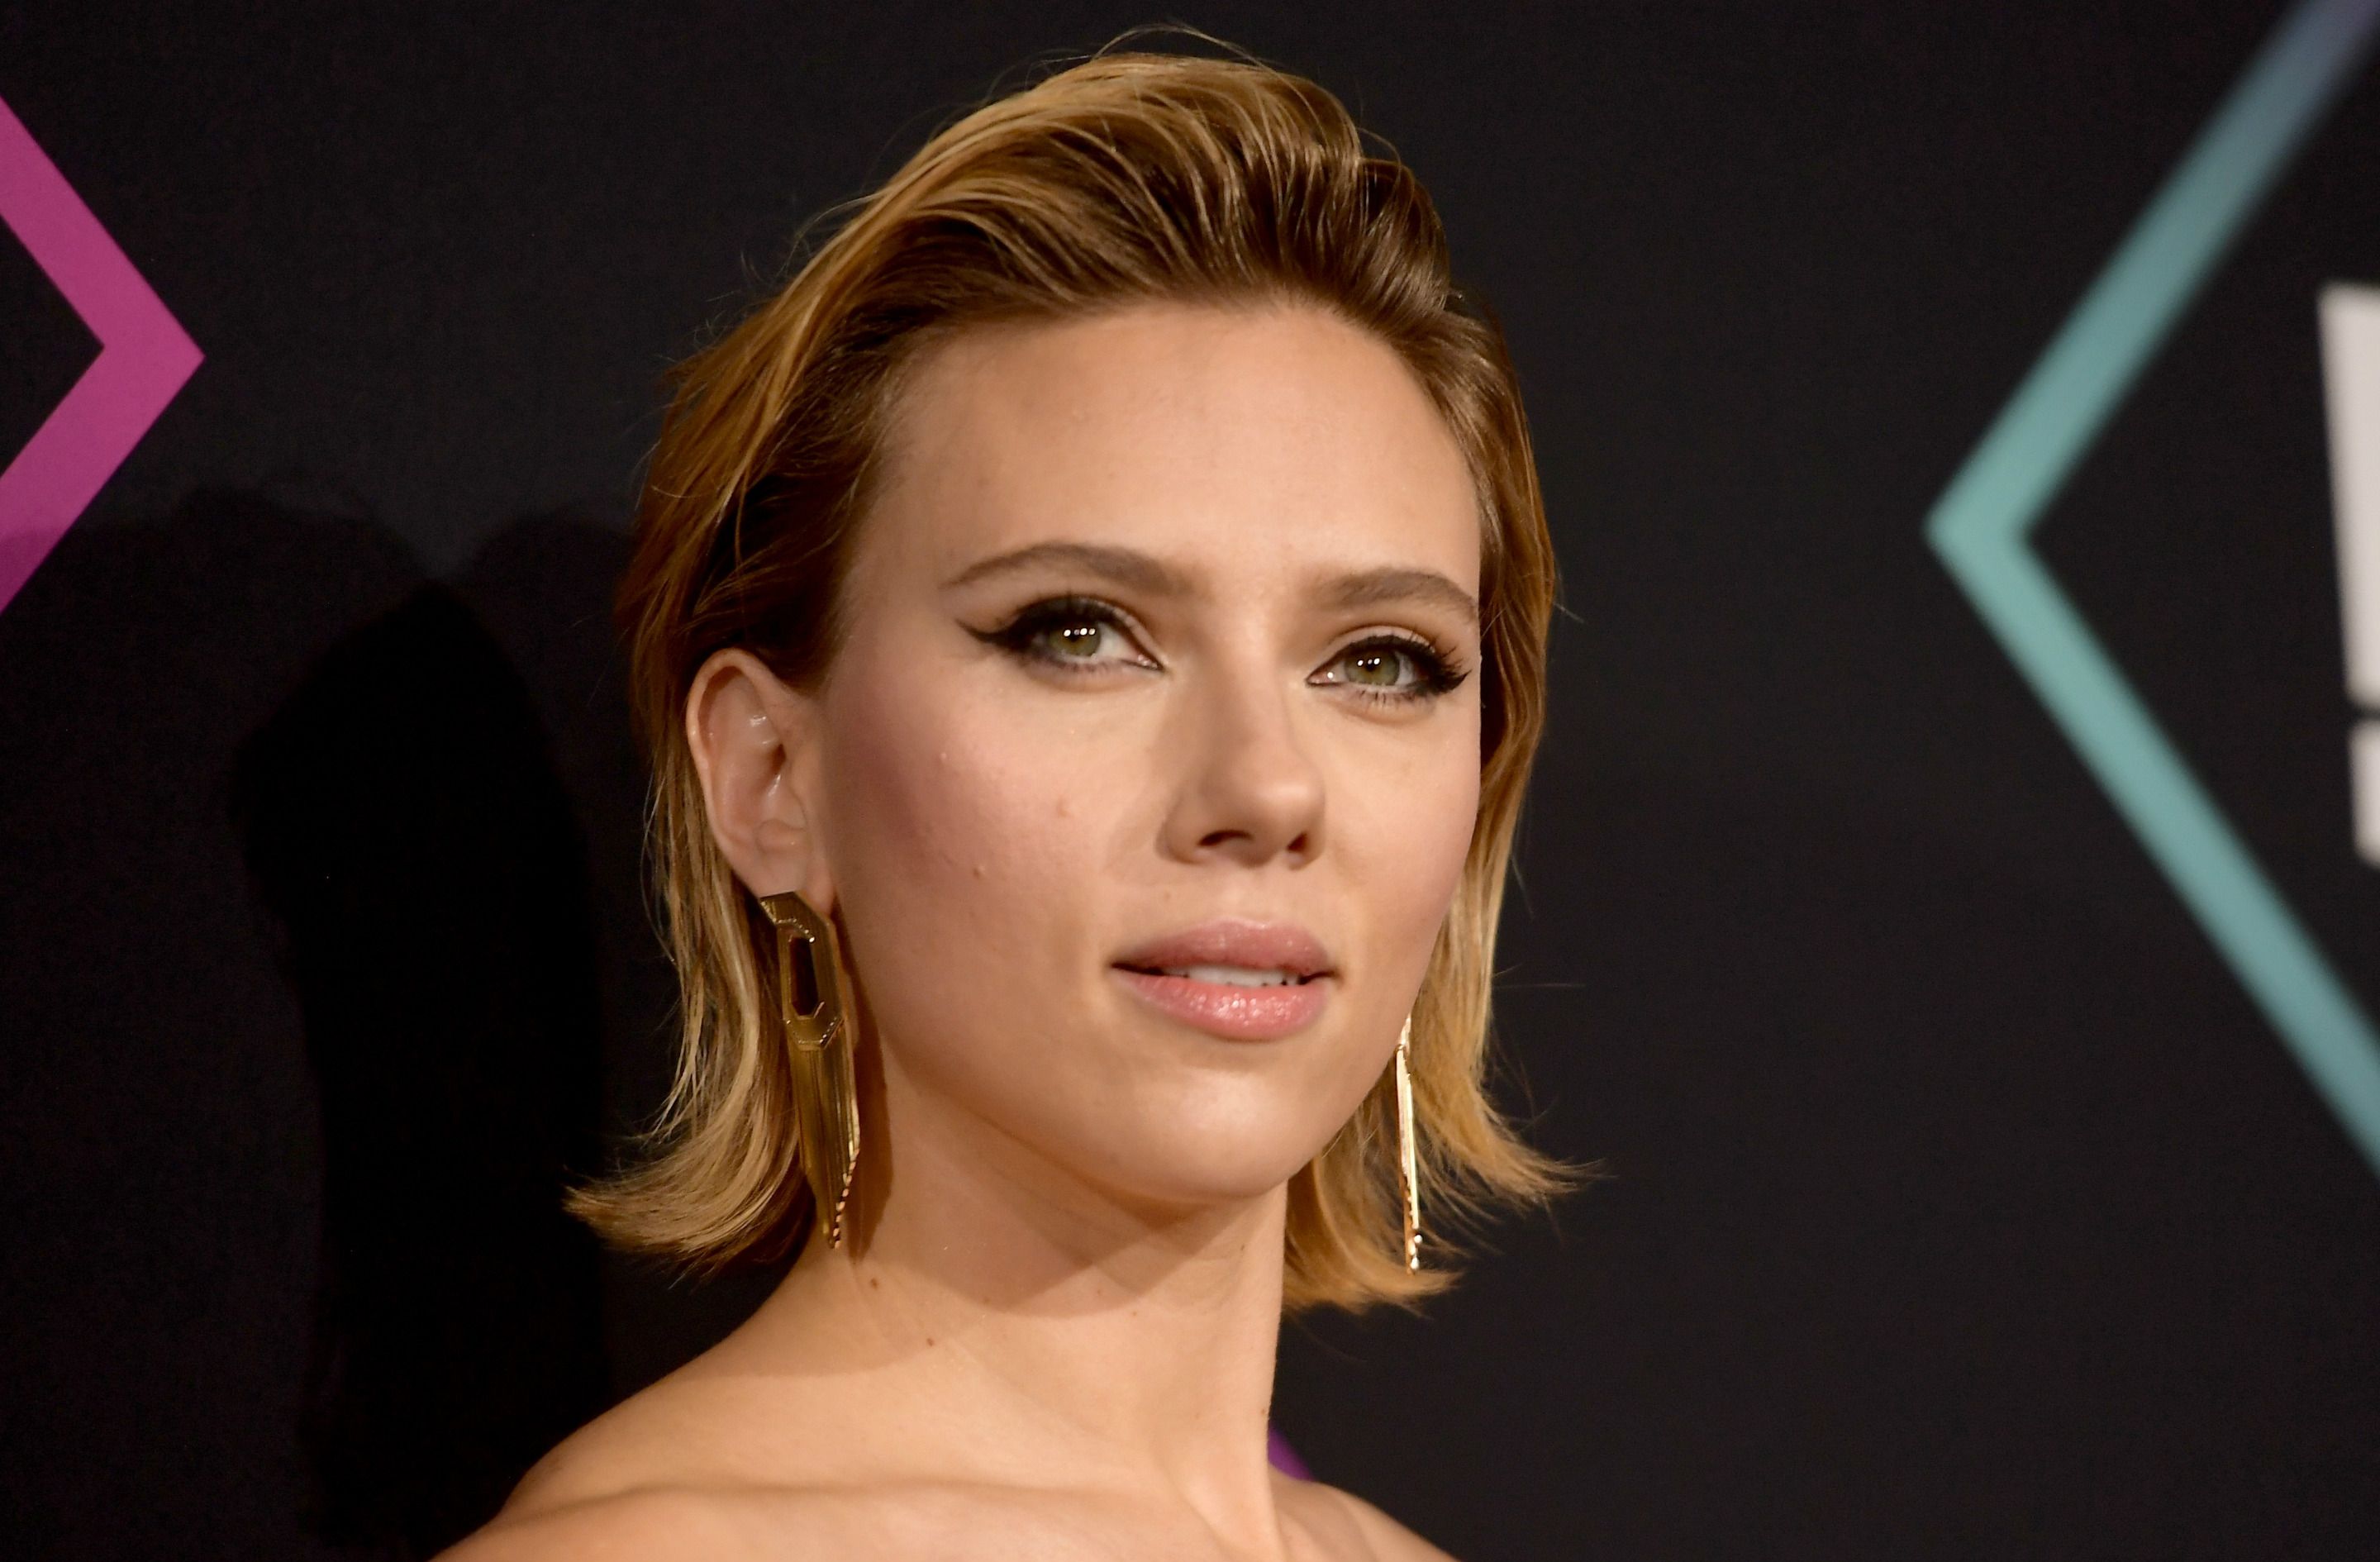 Porn You Scarlett Johansson - Scarlett Johansson Ruminates on Deepfake Porn of Her Image